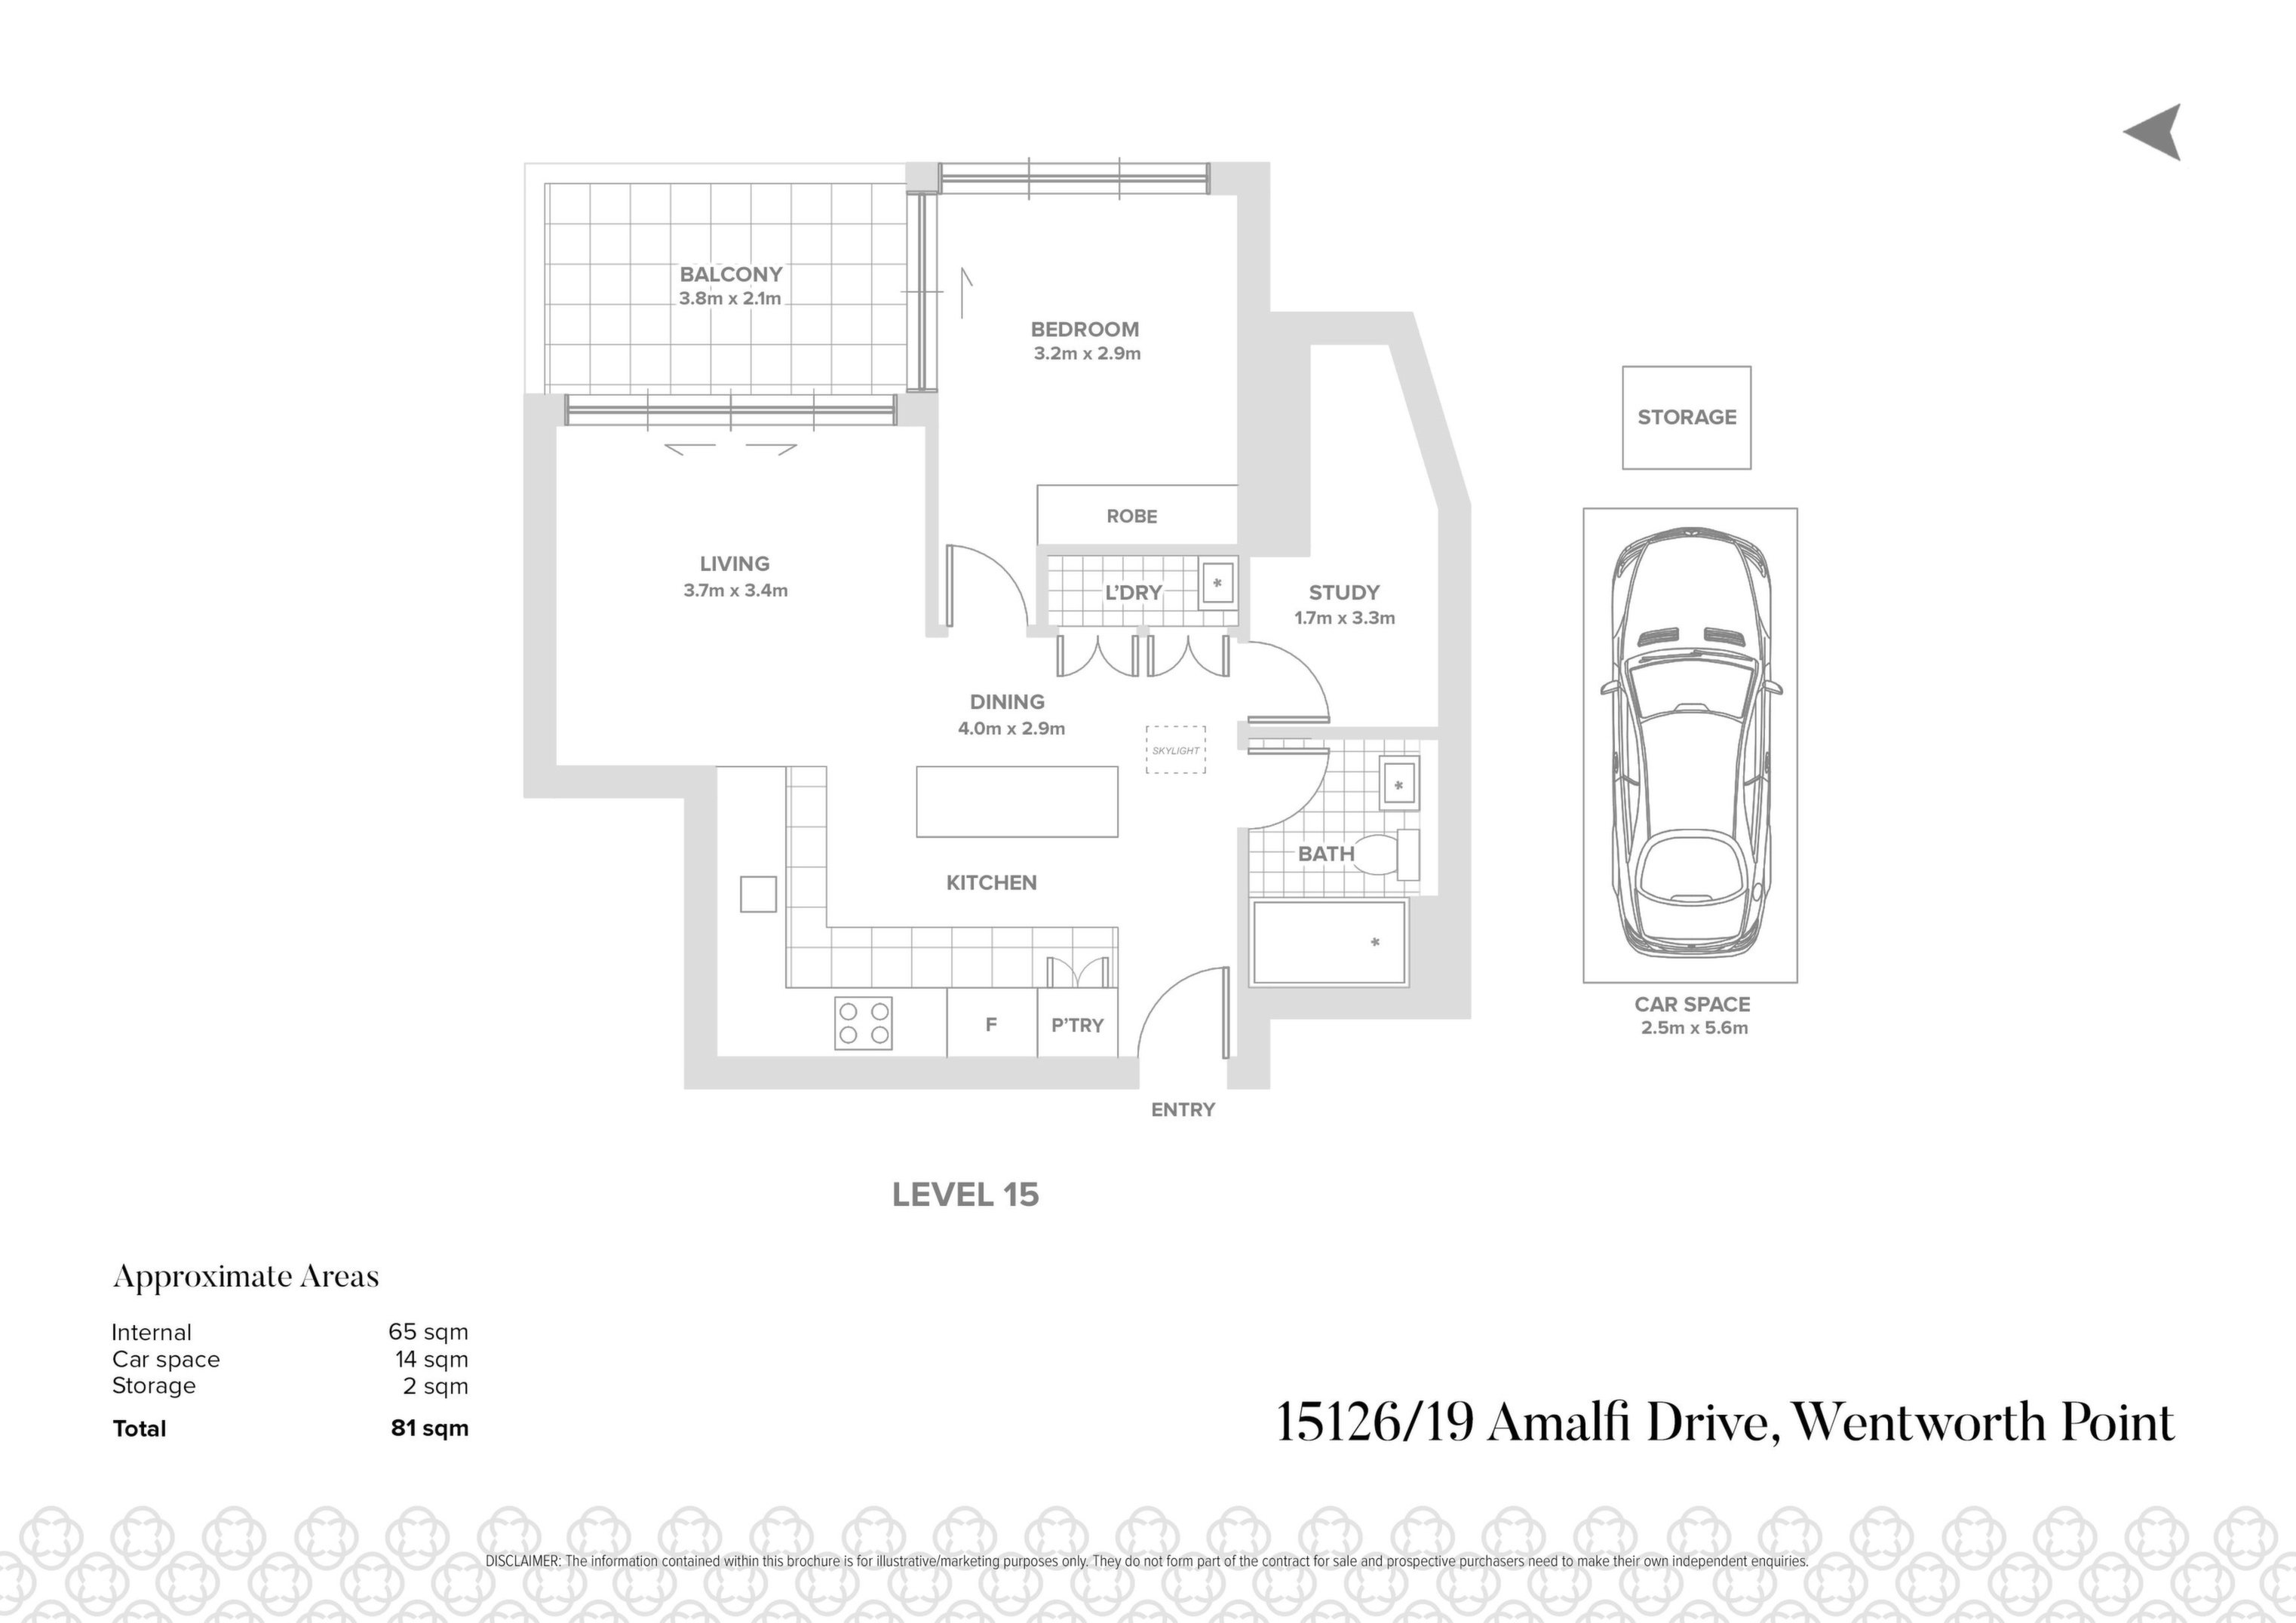 15126/19 Amalfi Drive, Wentworth Point Sold by Chidiac Realty - floorplan